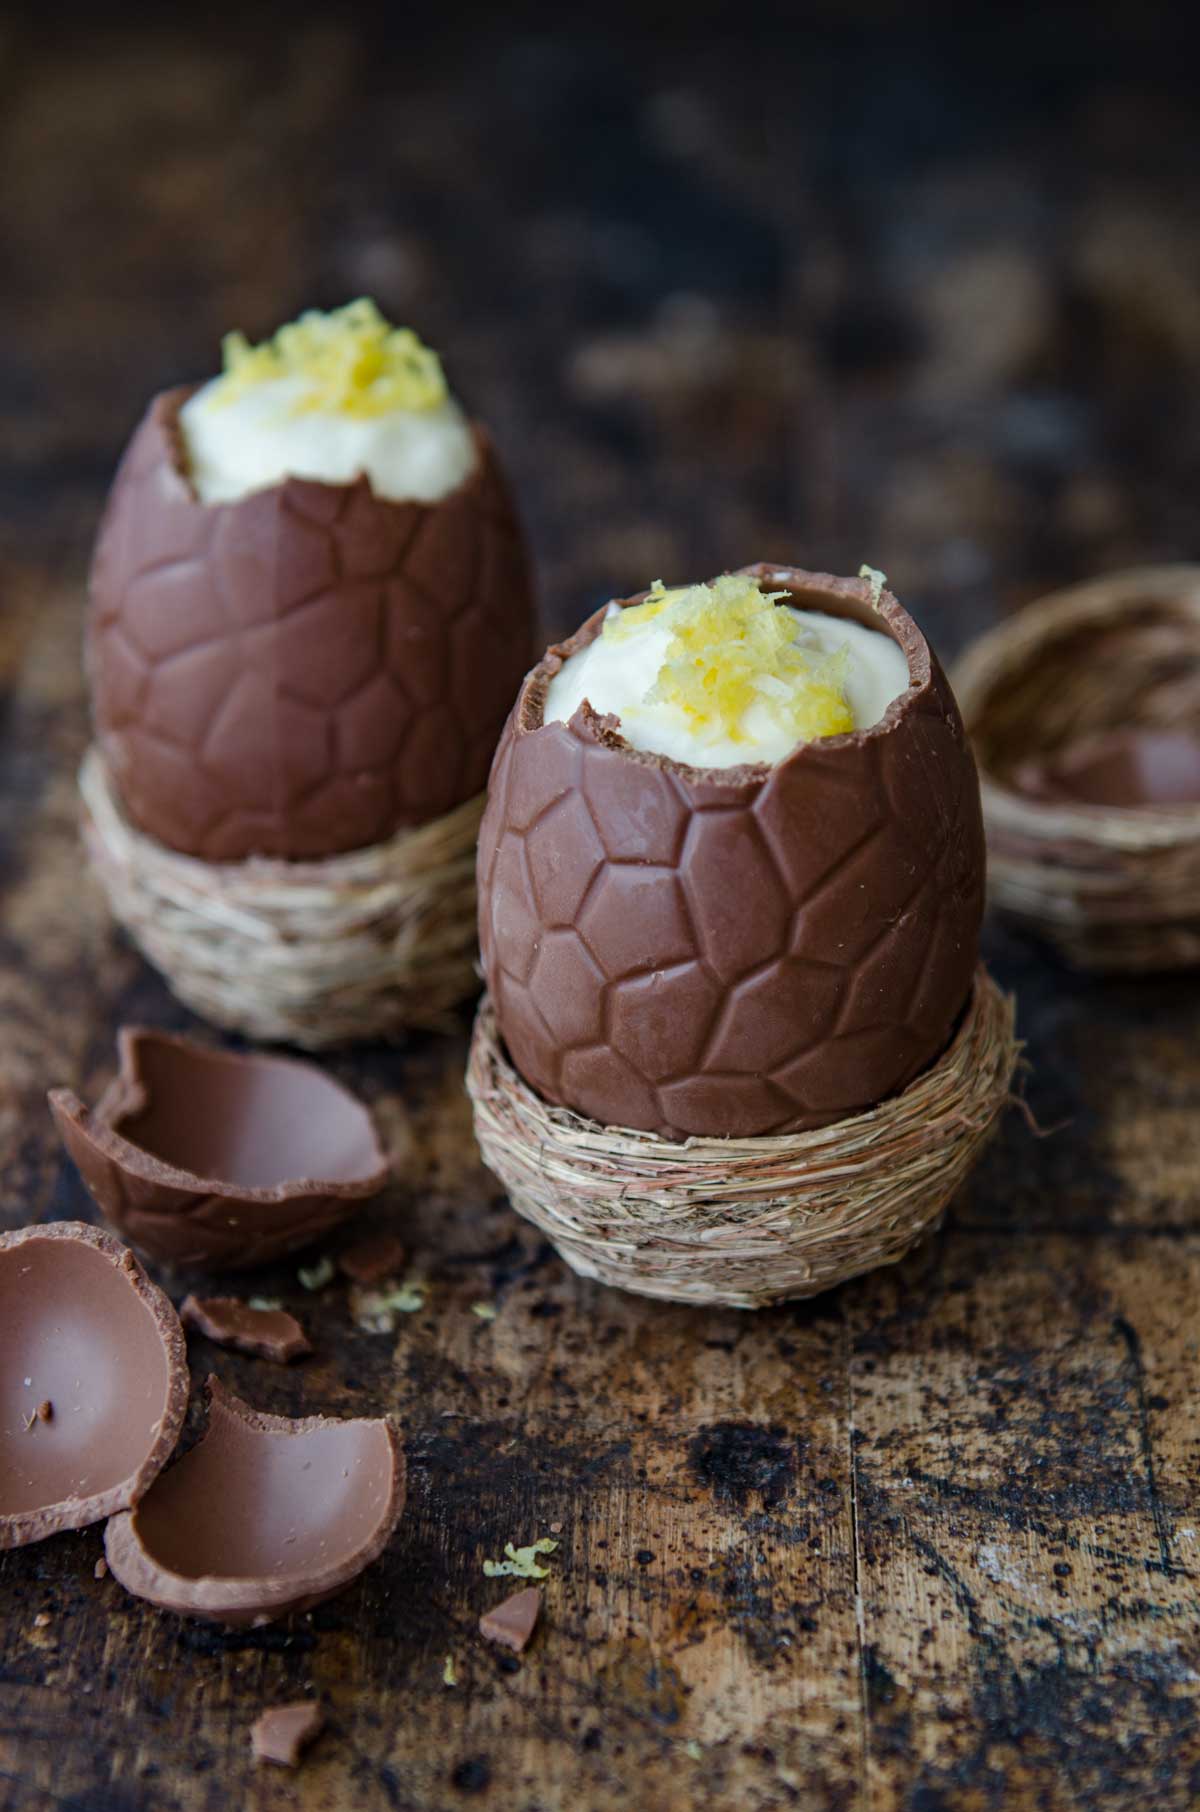 Lemon Mousse Filled Easter Eggs Recipe | Chew Town Food Blog